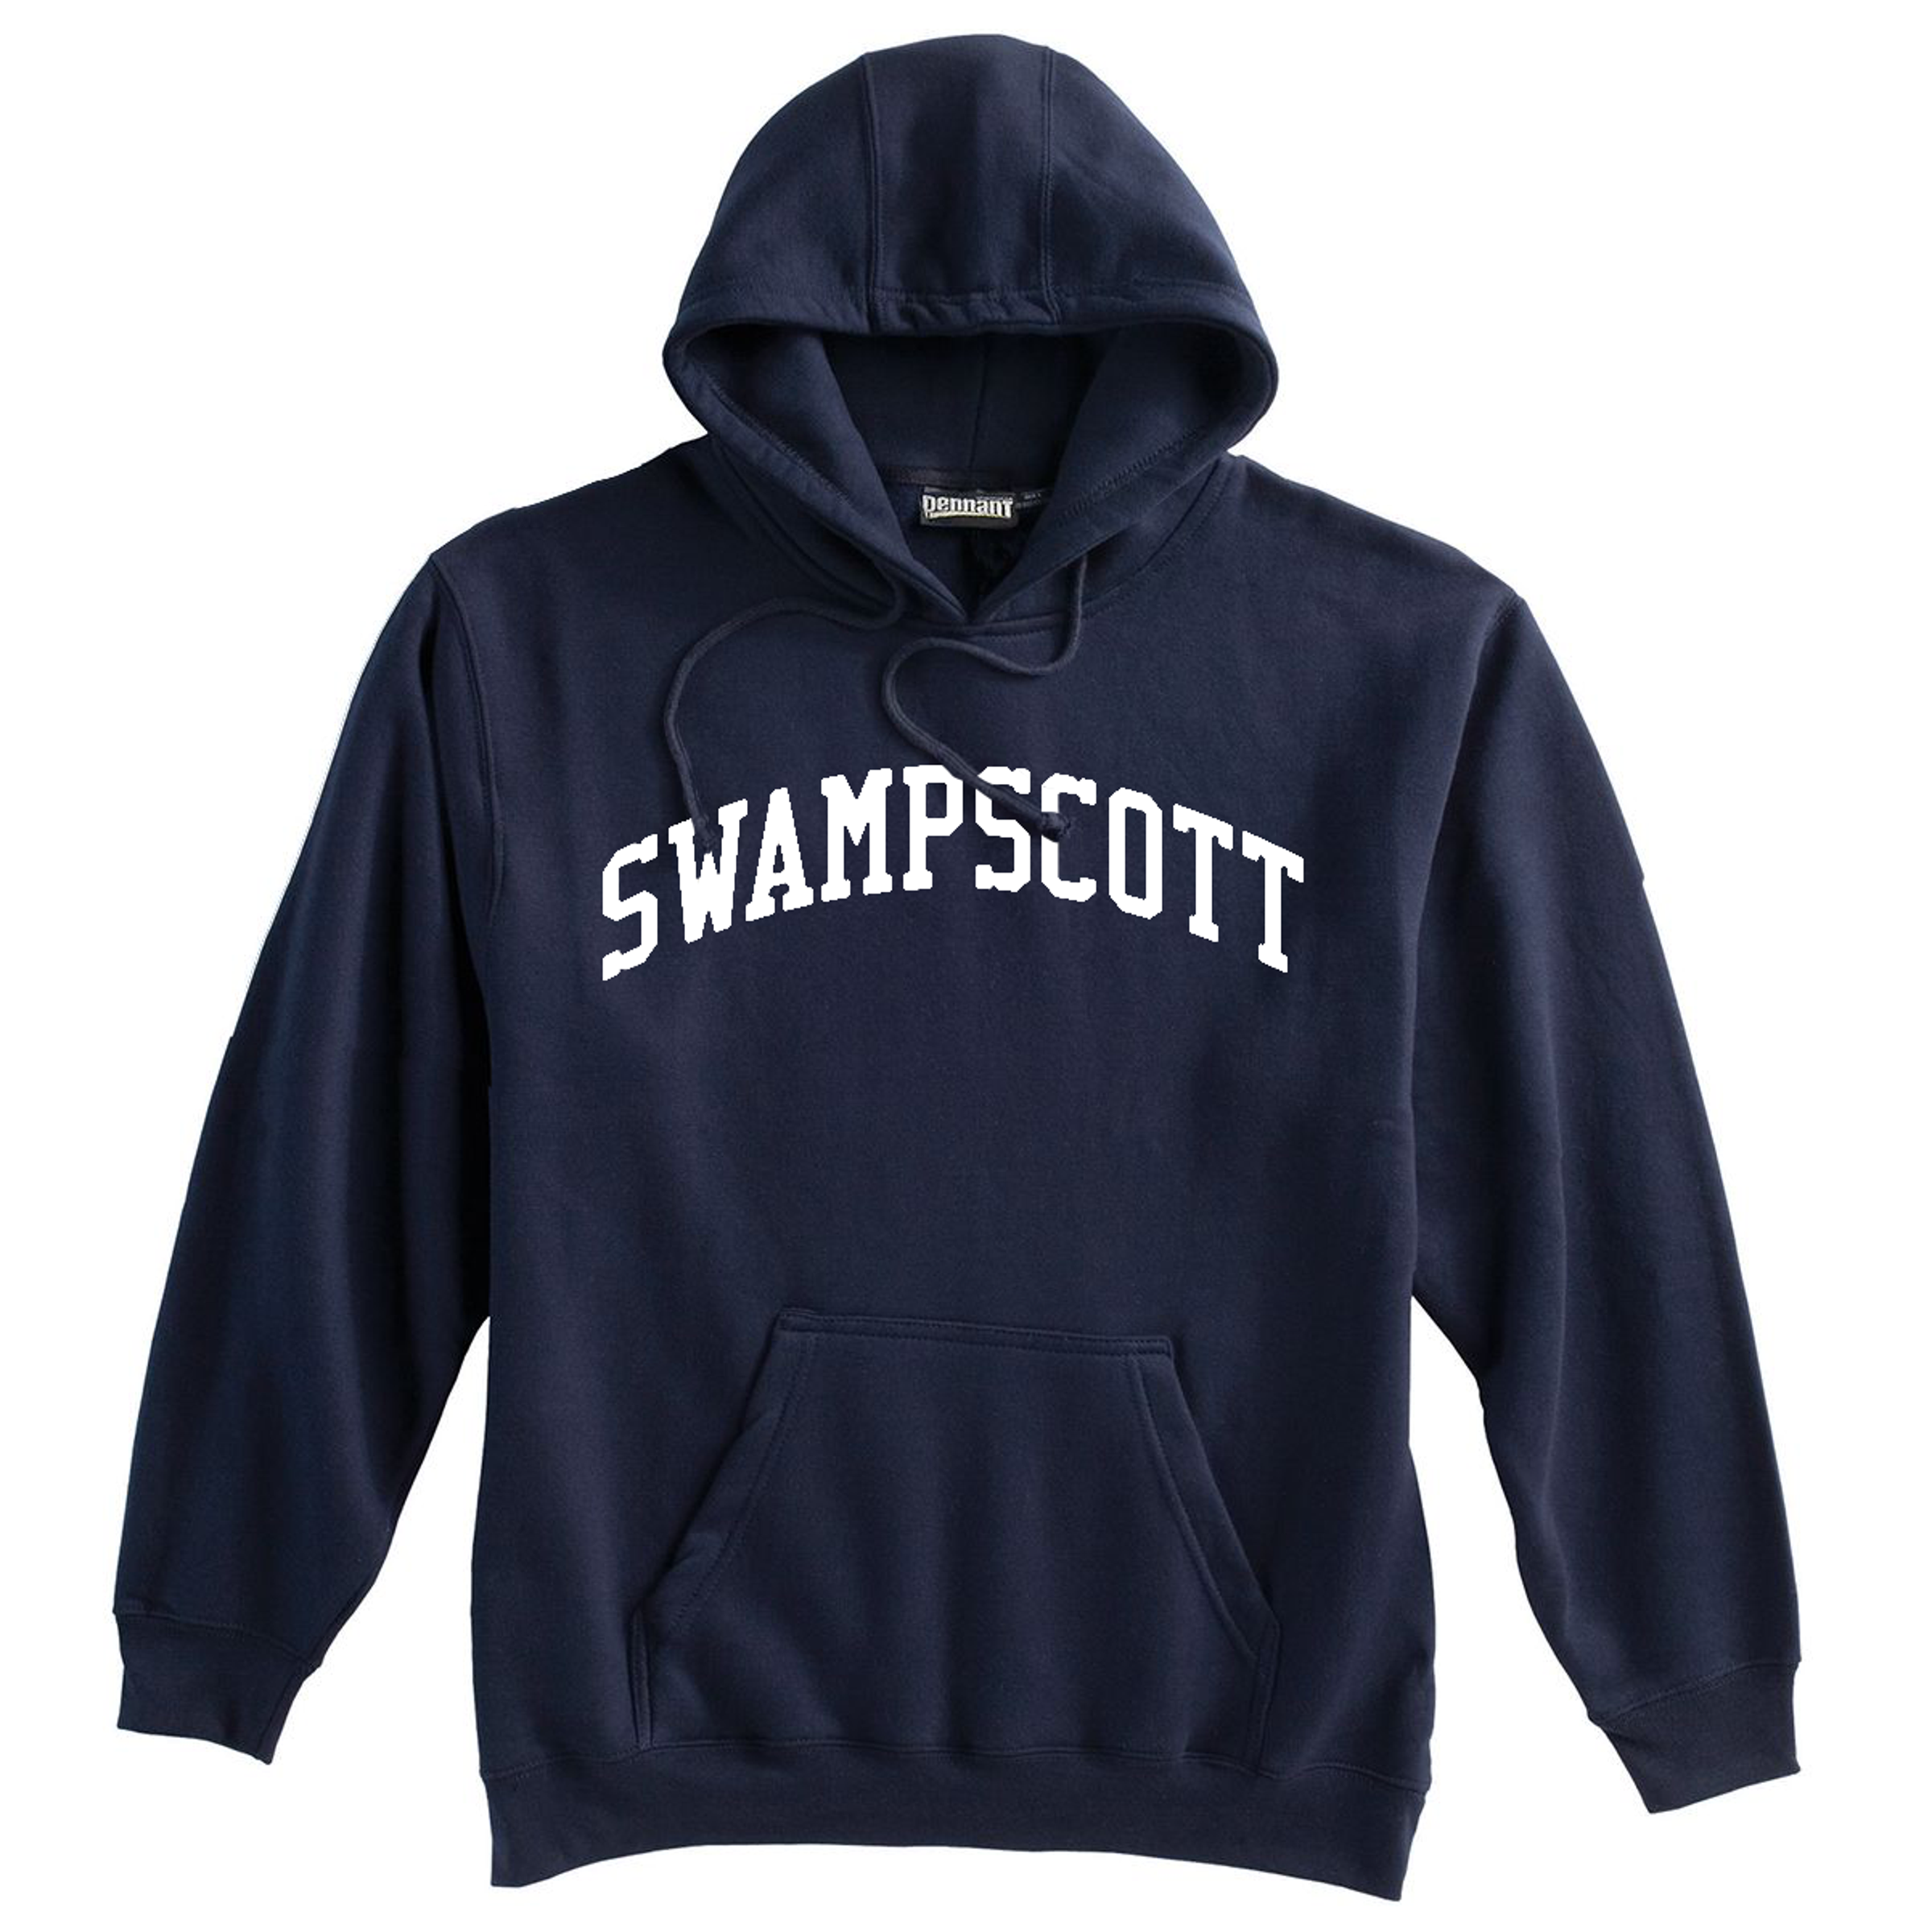 Swampscott Coastal Premium Hoodie